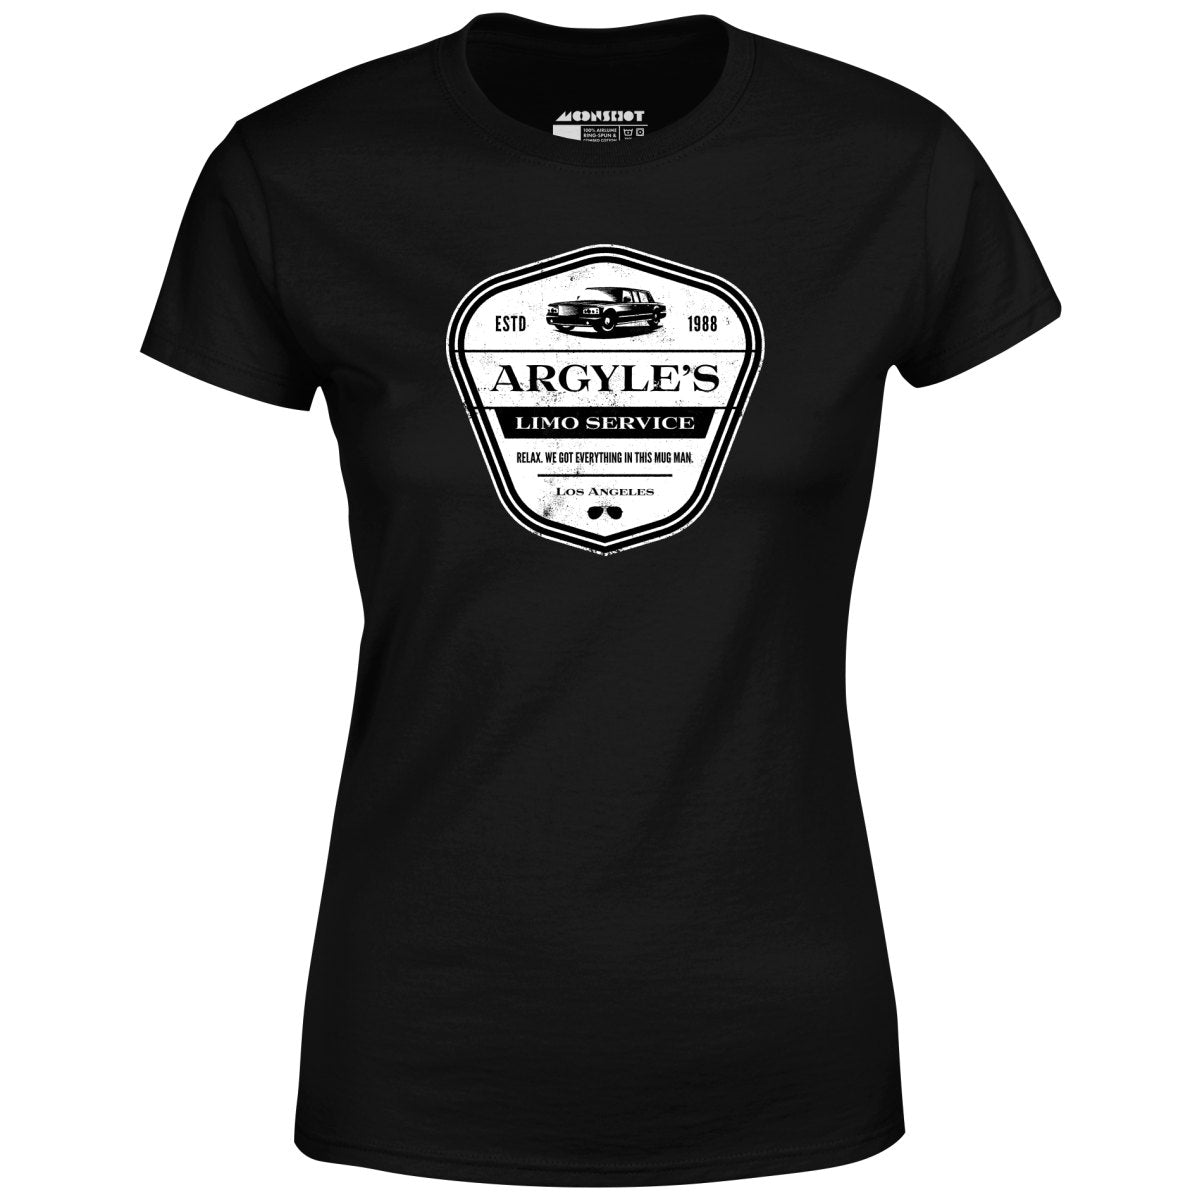 Argyle's Limo Service - Die Hard - Women's T-Shirt